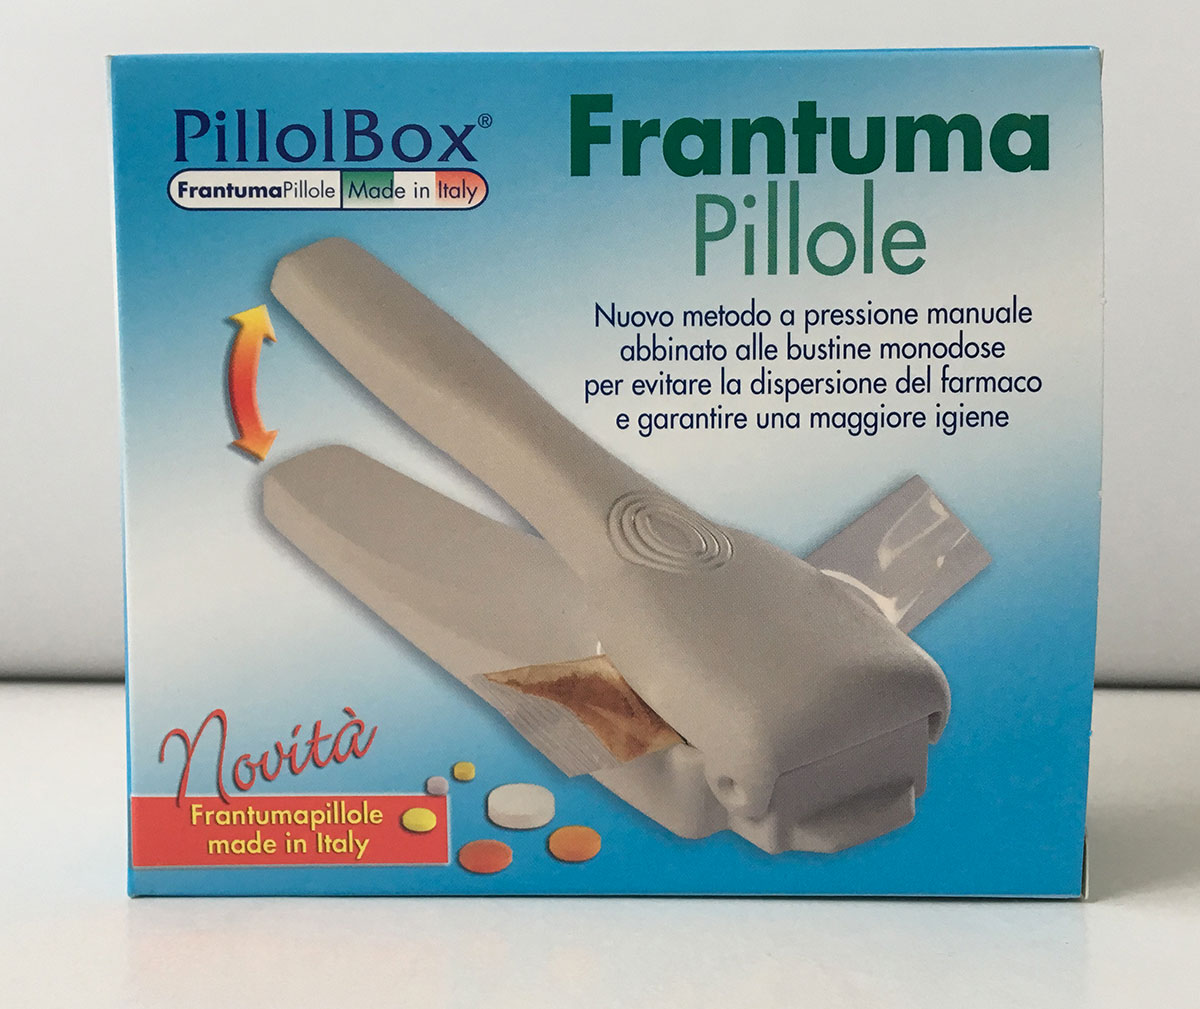 Image of Frantuma-Pillole PillolBox